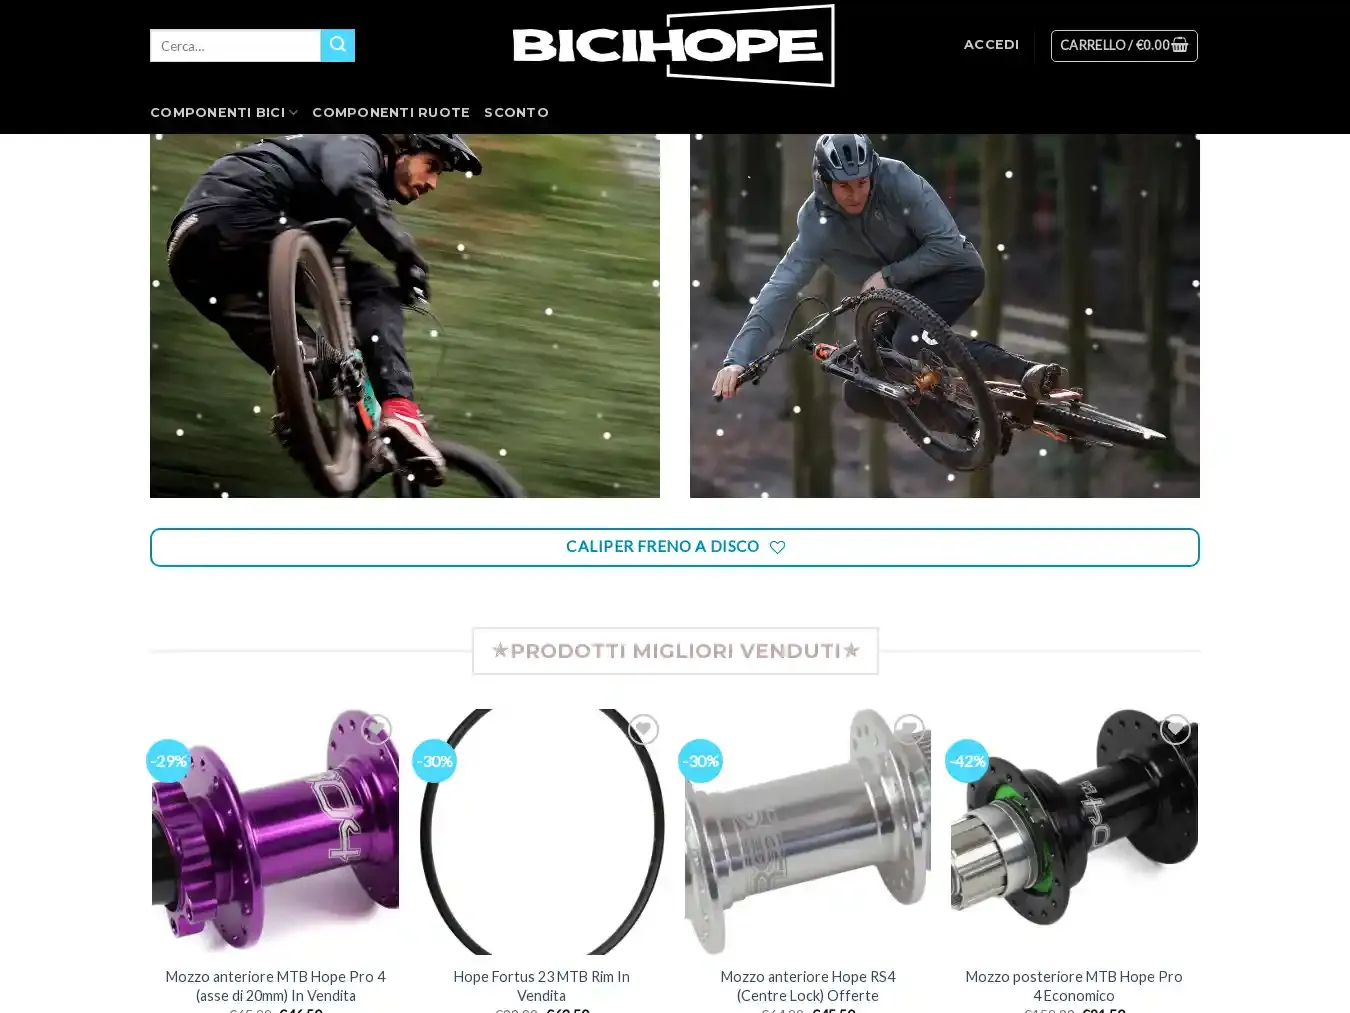 Bicihope.com Fraudulent Non-Delivery website.